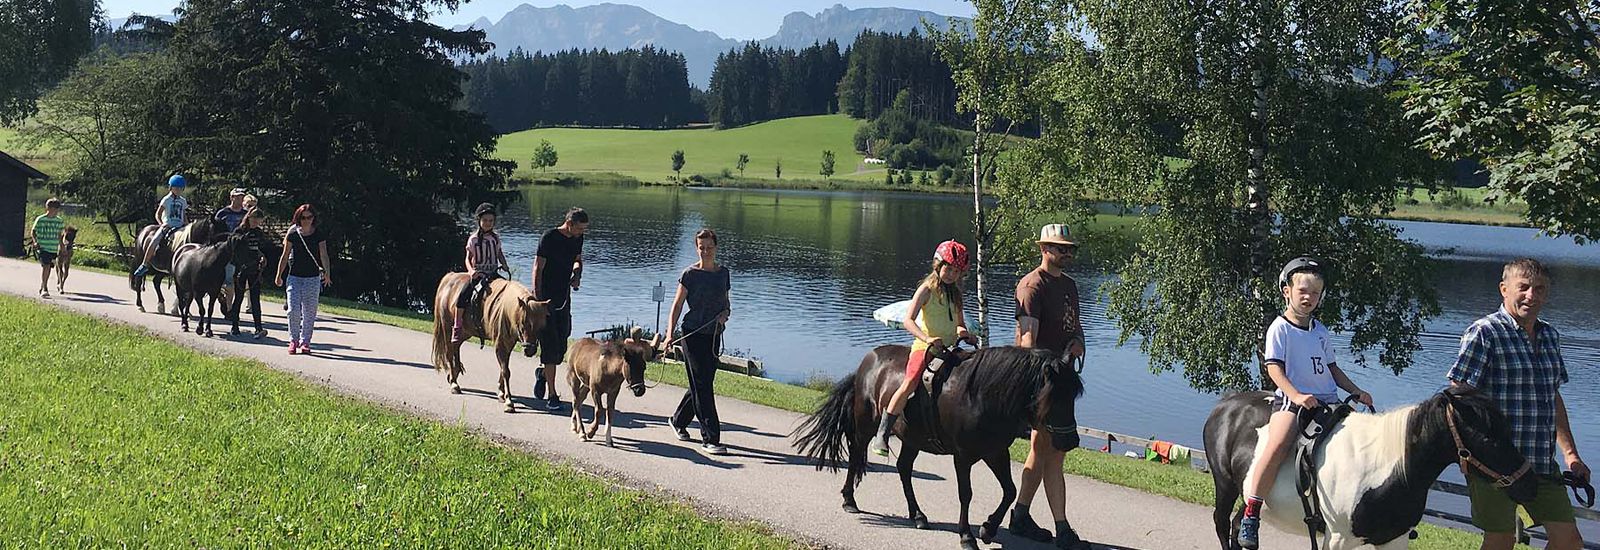 Ponyreiten in Nesselwang im Allgäu